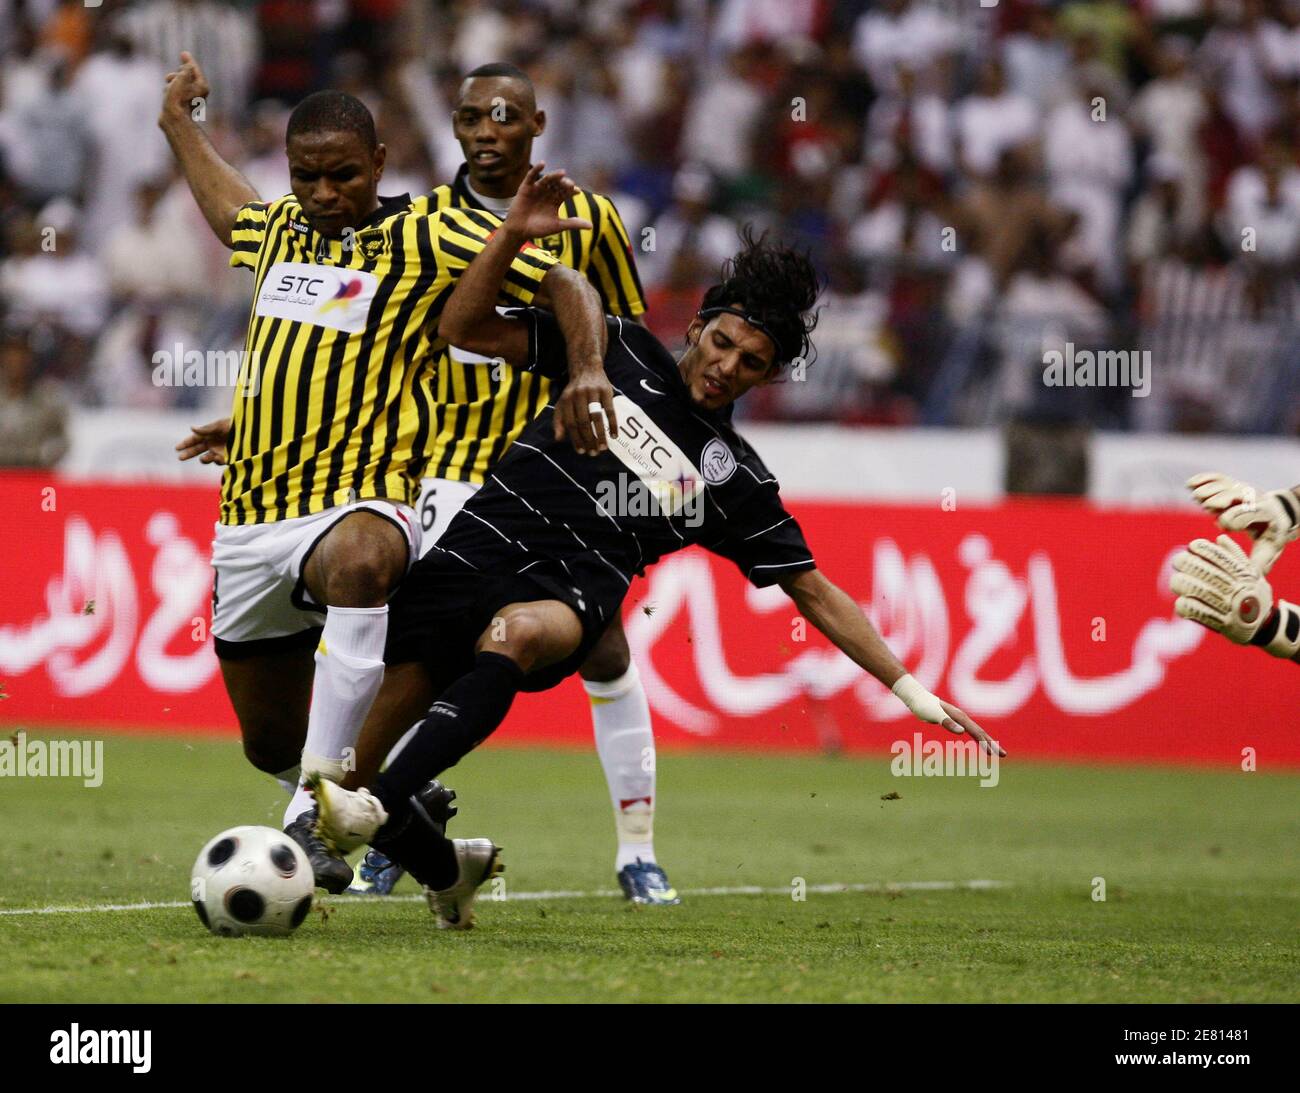 Abed Al Aziz Suaran (R) d'Al Shabab se bat avec Reda Nakeer d'Itihad pour le ballon lors de leur match de football final de la coupe du Roi saoudien à Riyad le 15 mai 2009. REUTERS/Fahad Shadeed (FOOTBALL DE SPORT EN ARABIE SAOUDITE) Banque D'Images